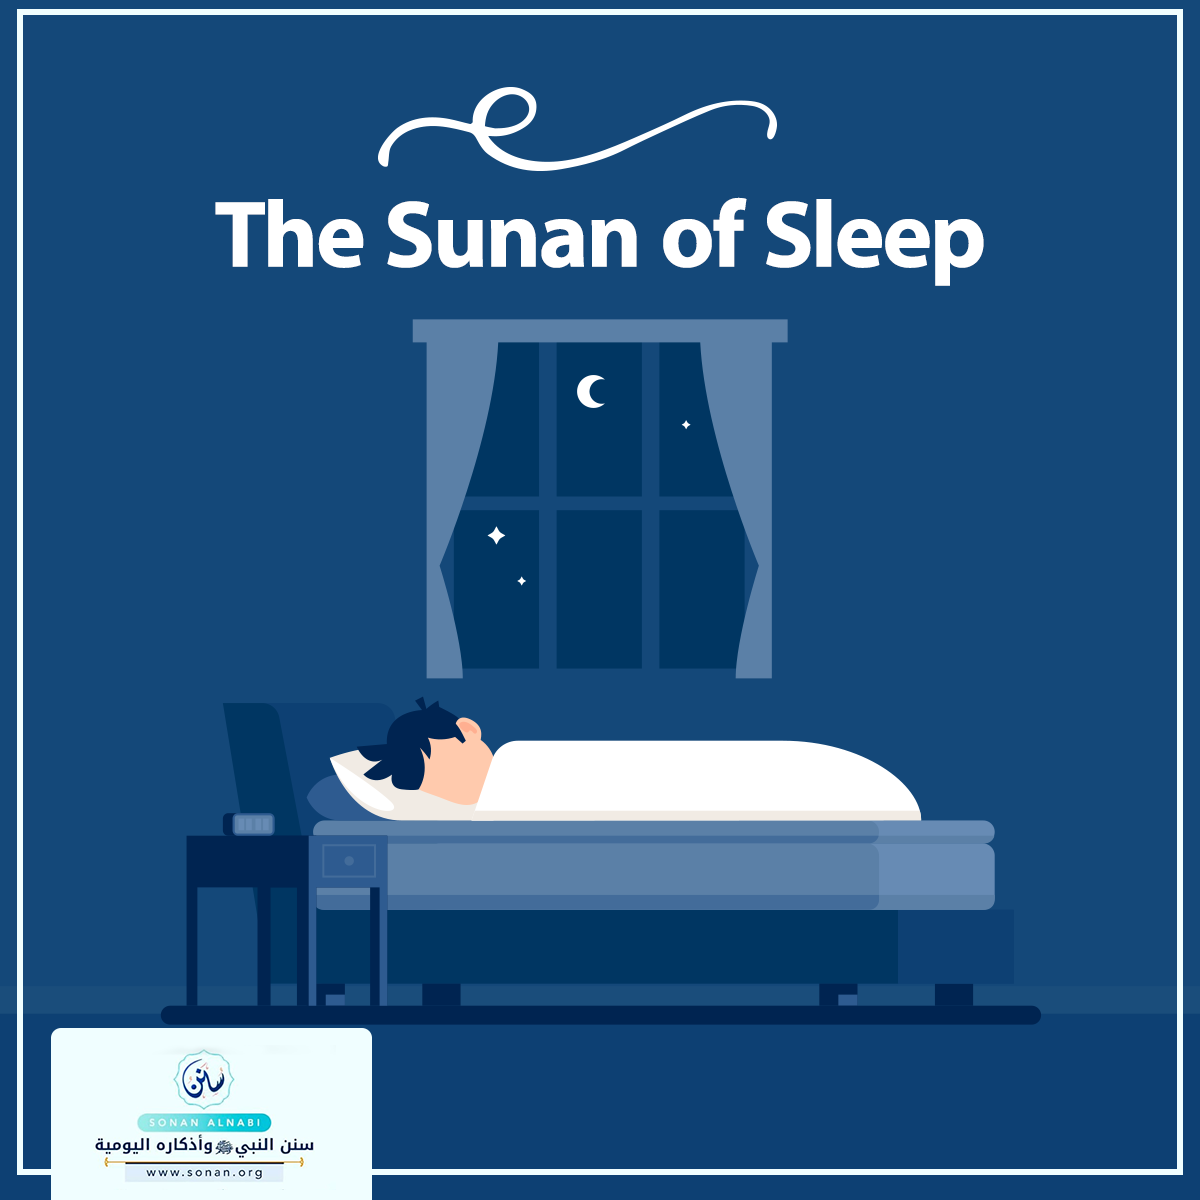 The Sunan of Sleep: